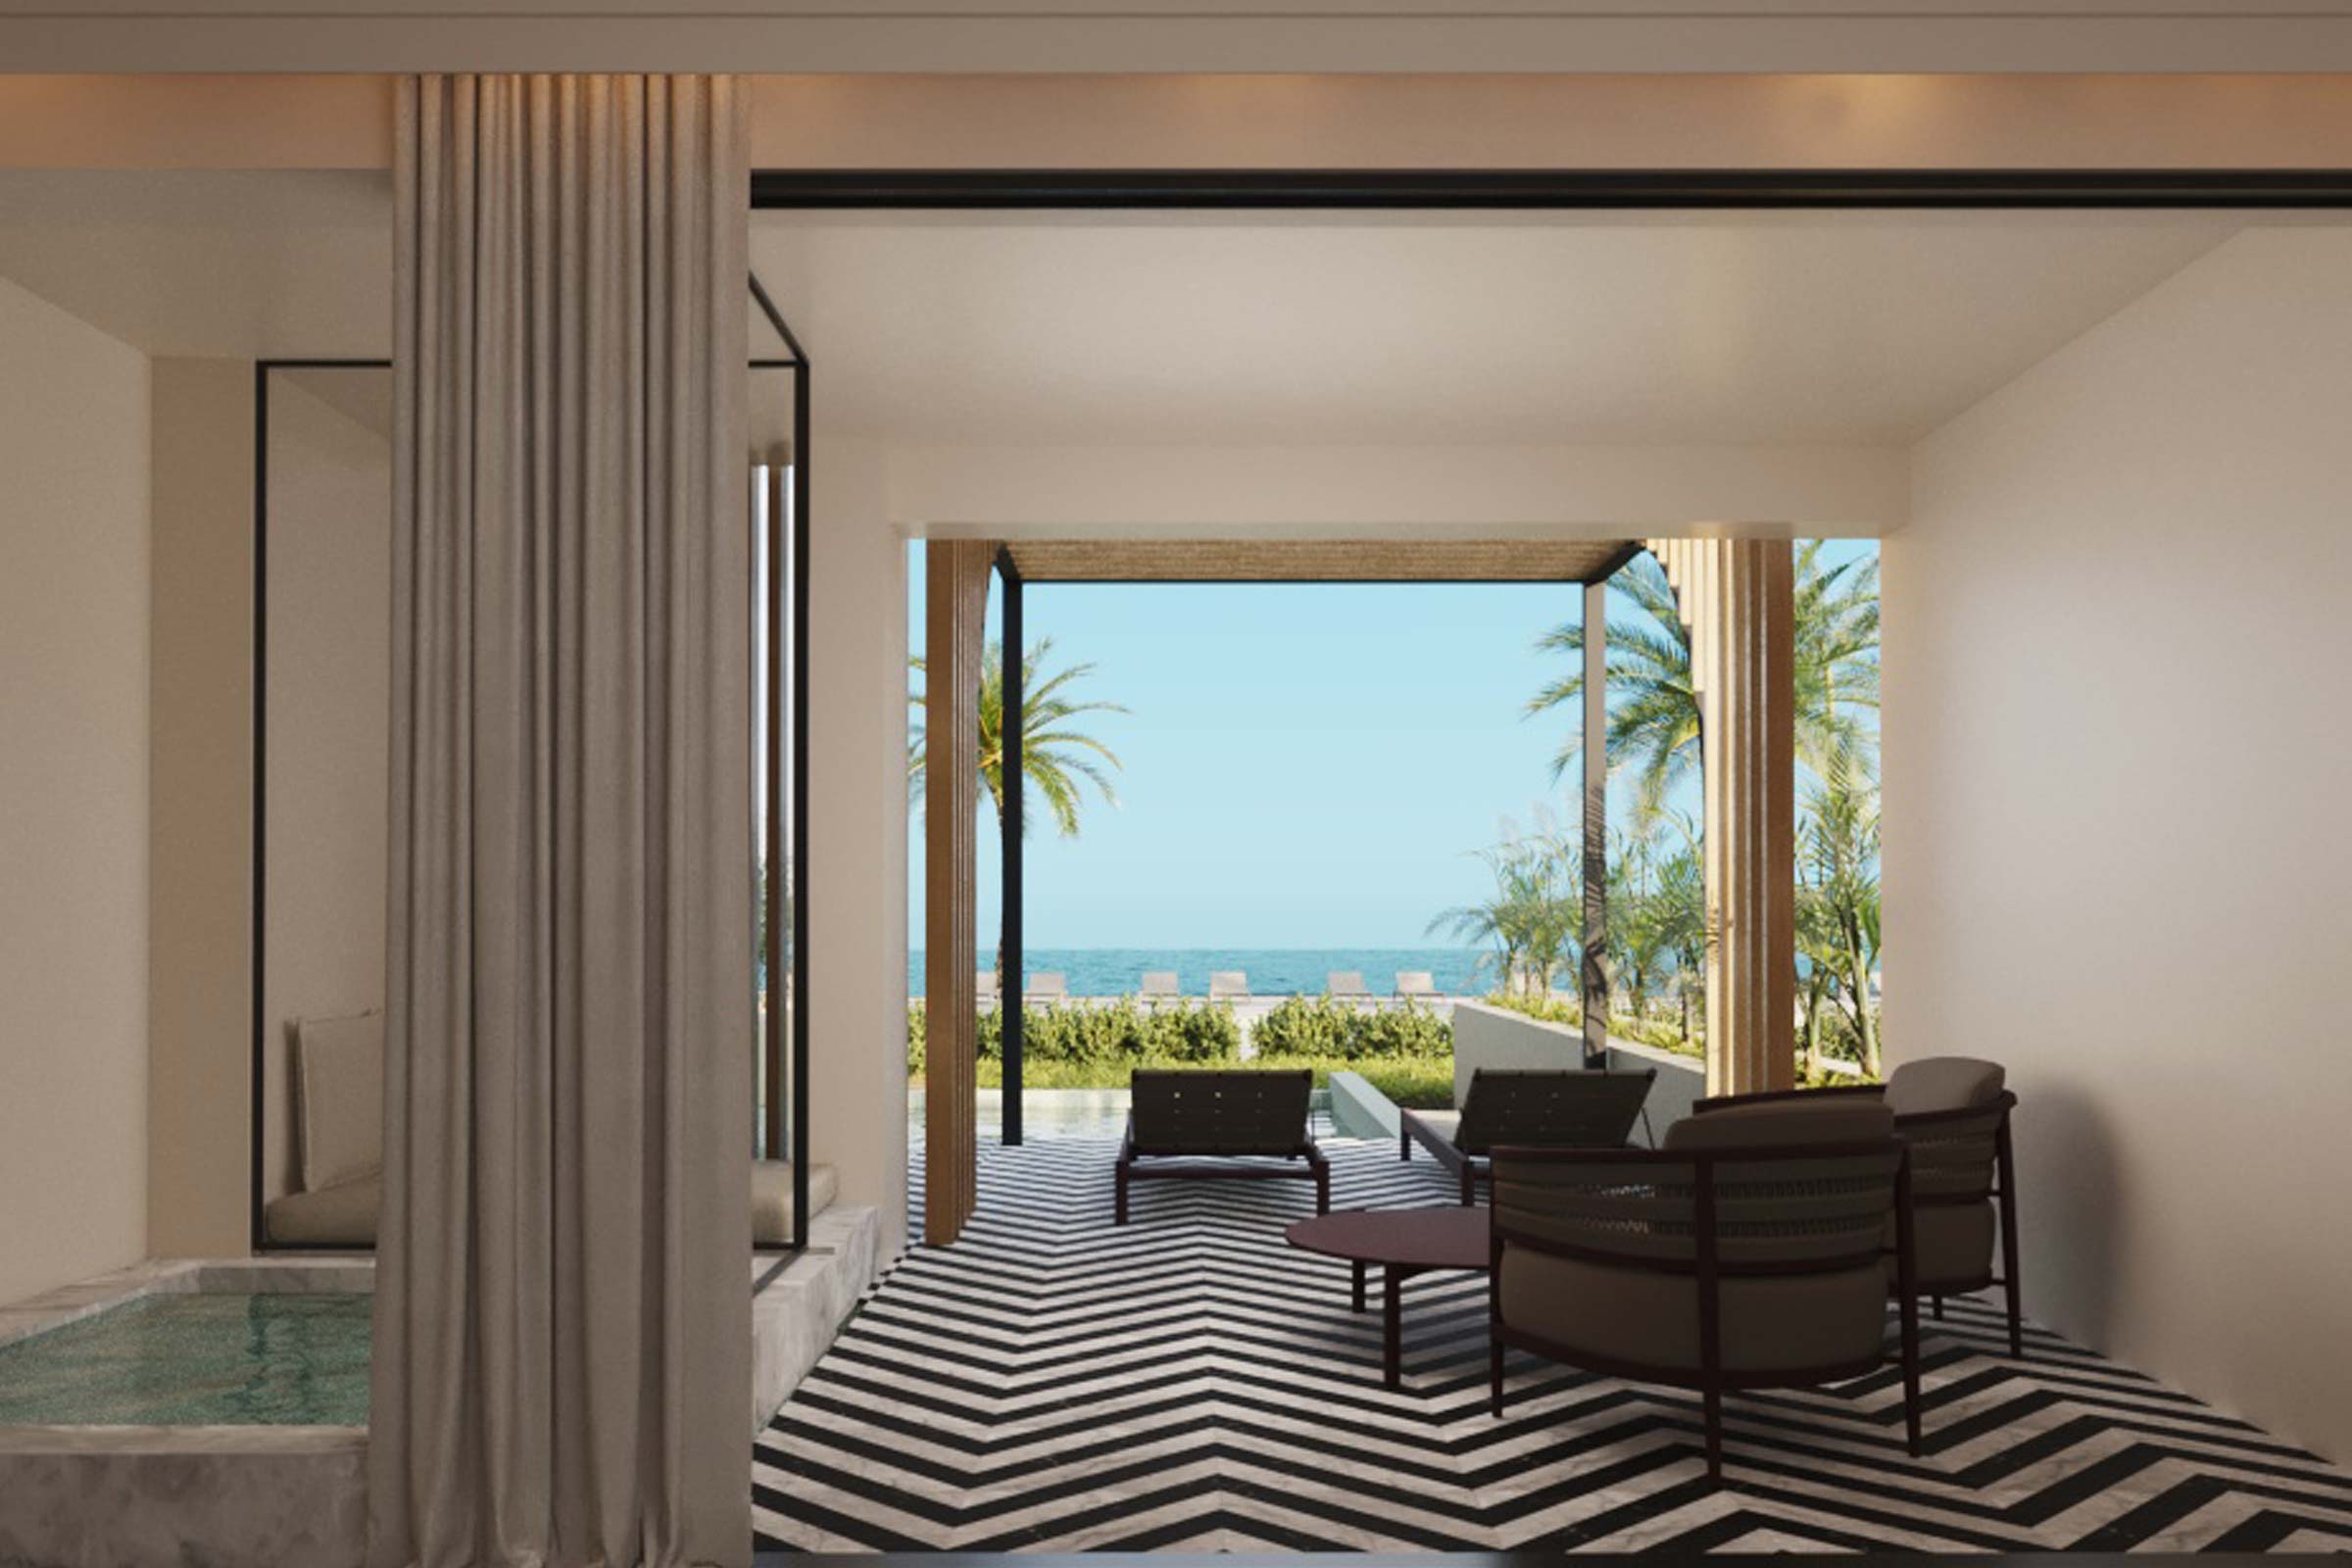 Honeymoon suite beside the beach in Cancun